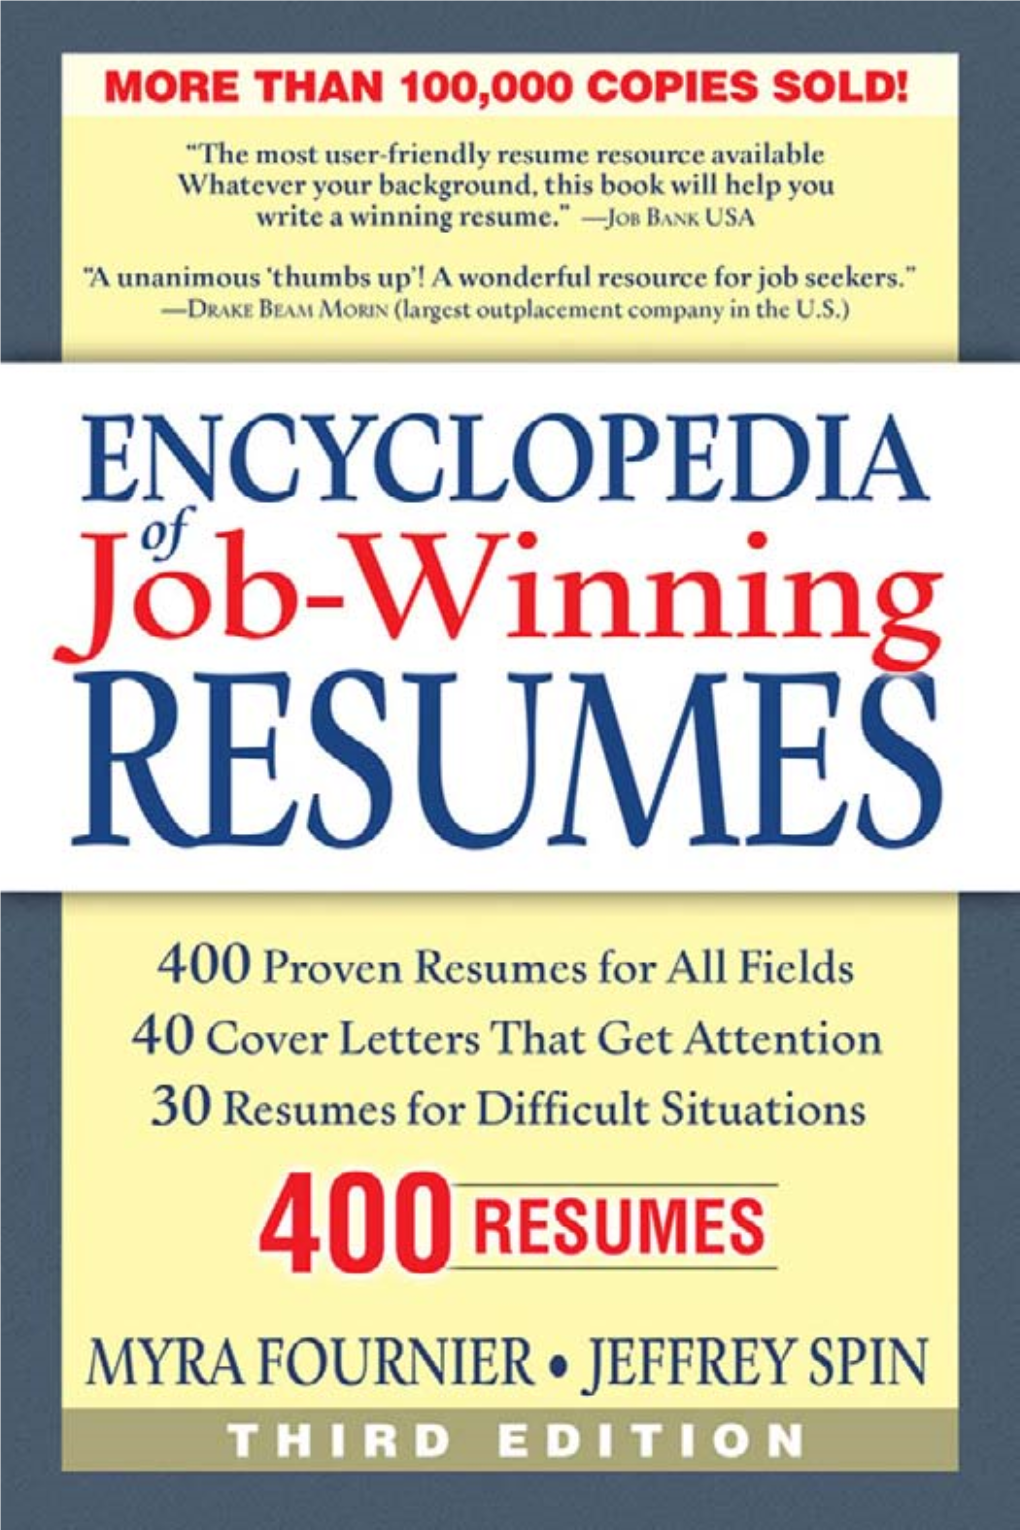 Encyclopedia of Job-Winning Resumes.Pdf